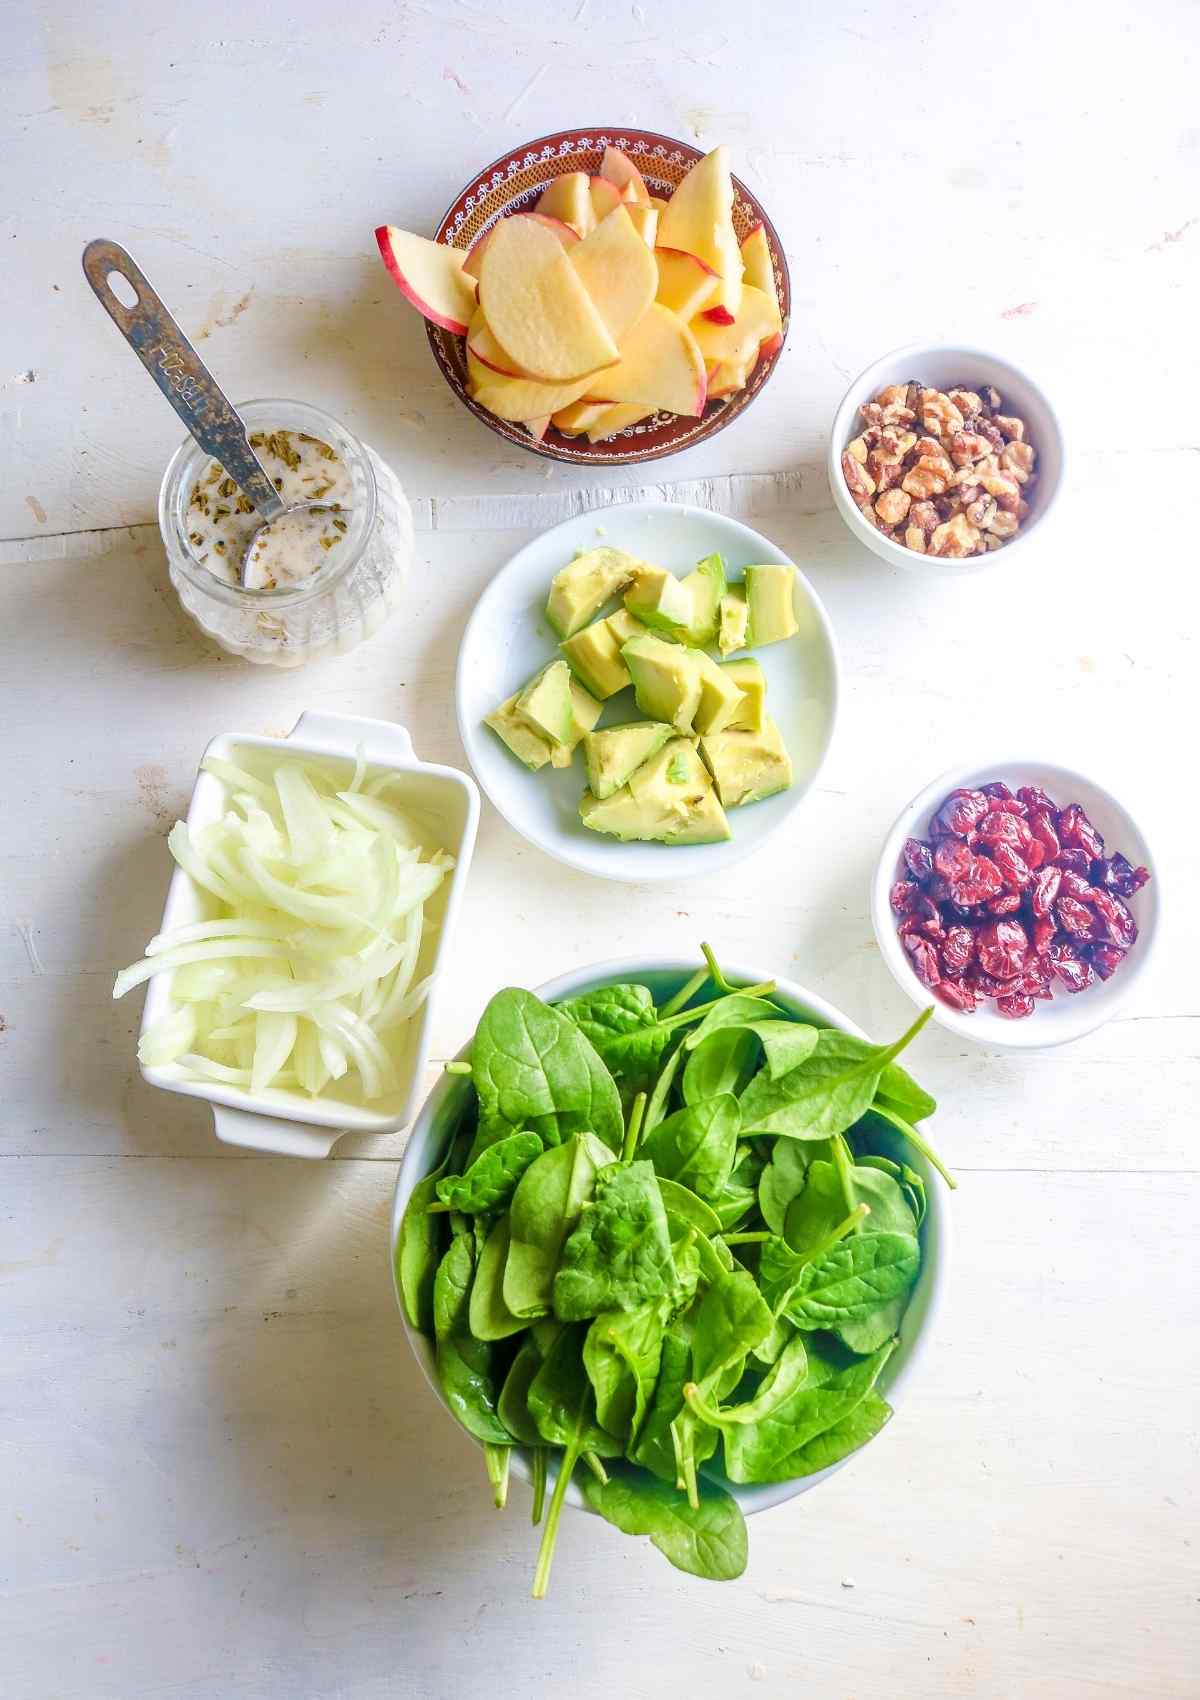 Ingredients to make vegan spinach salad